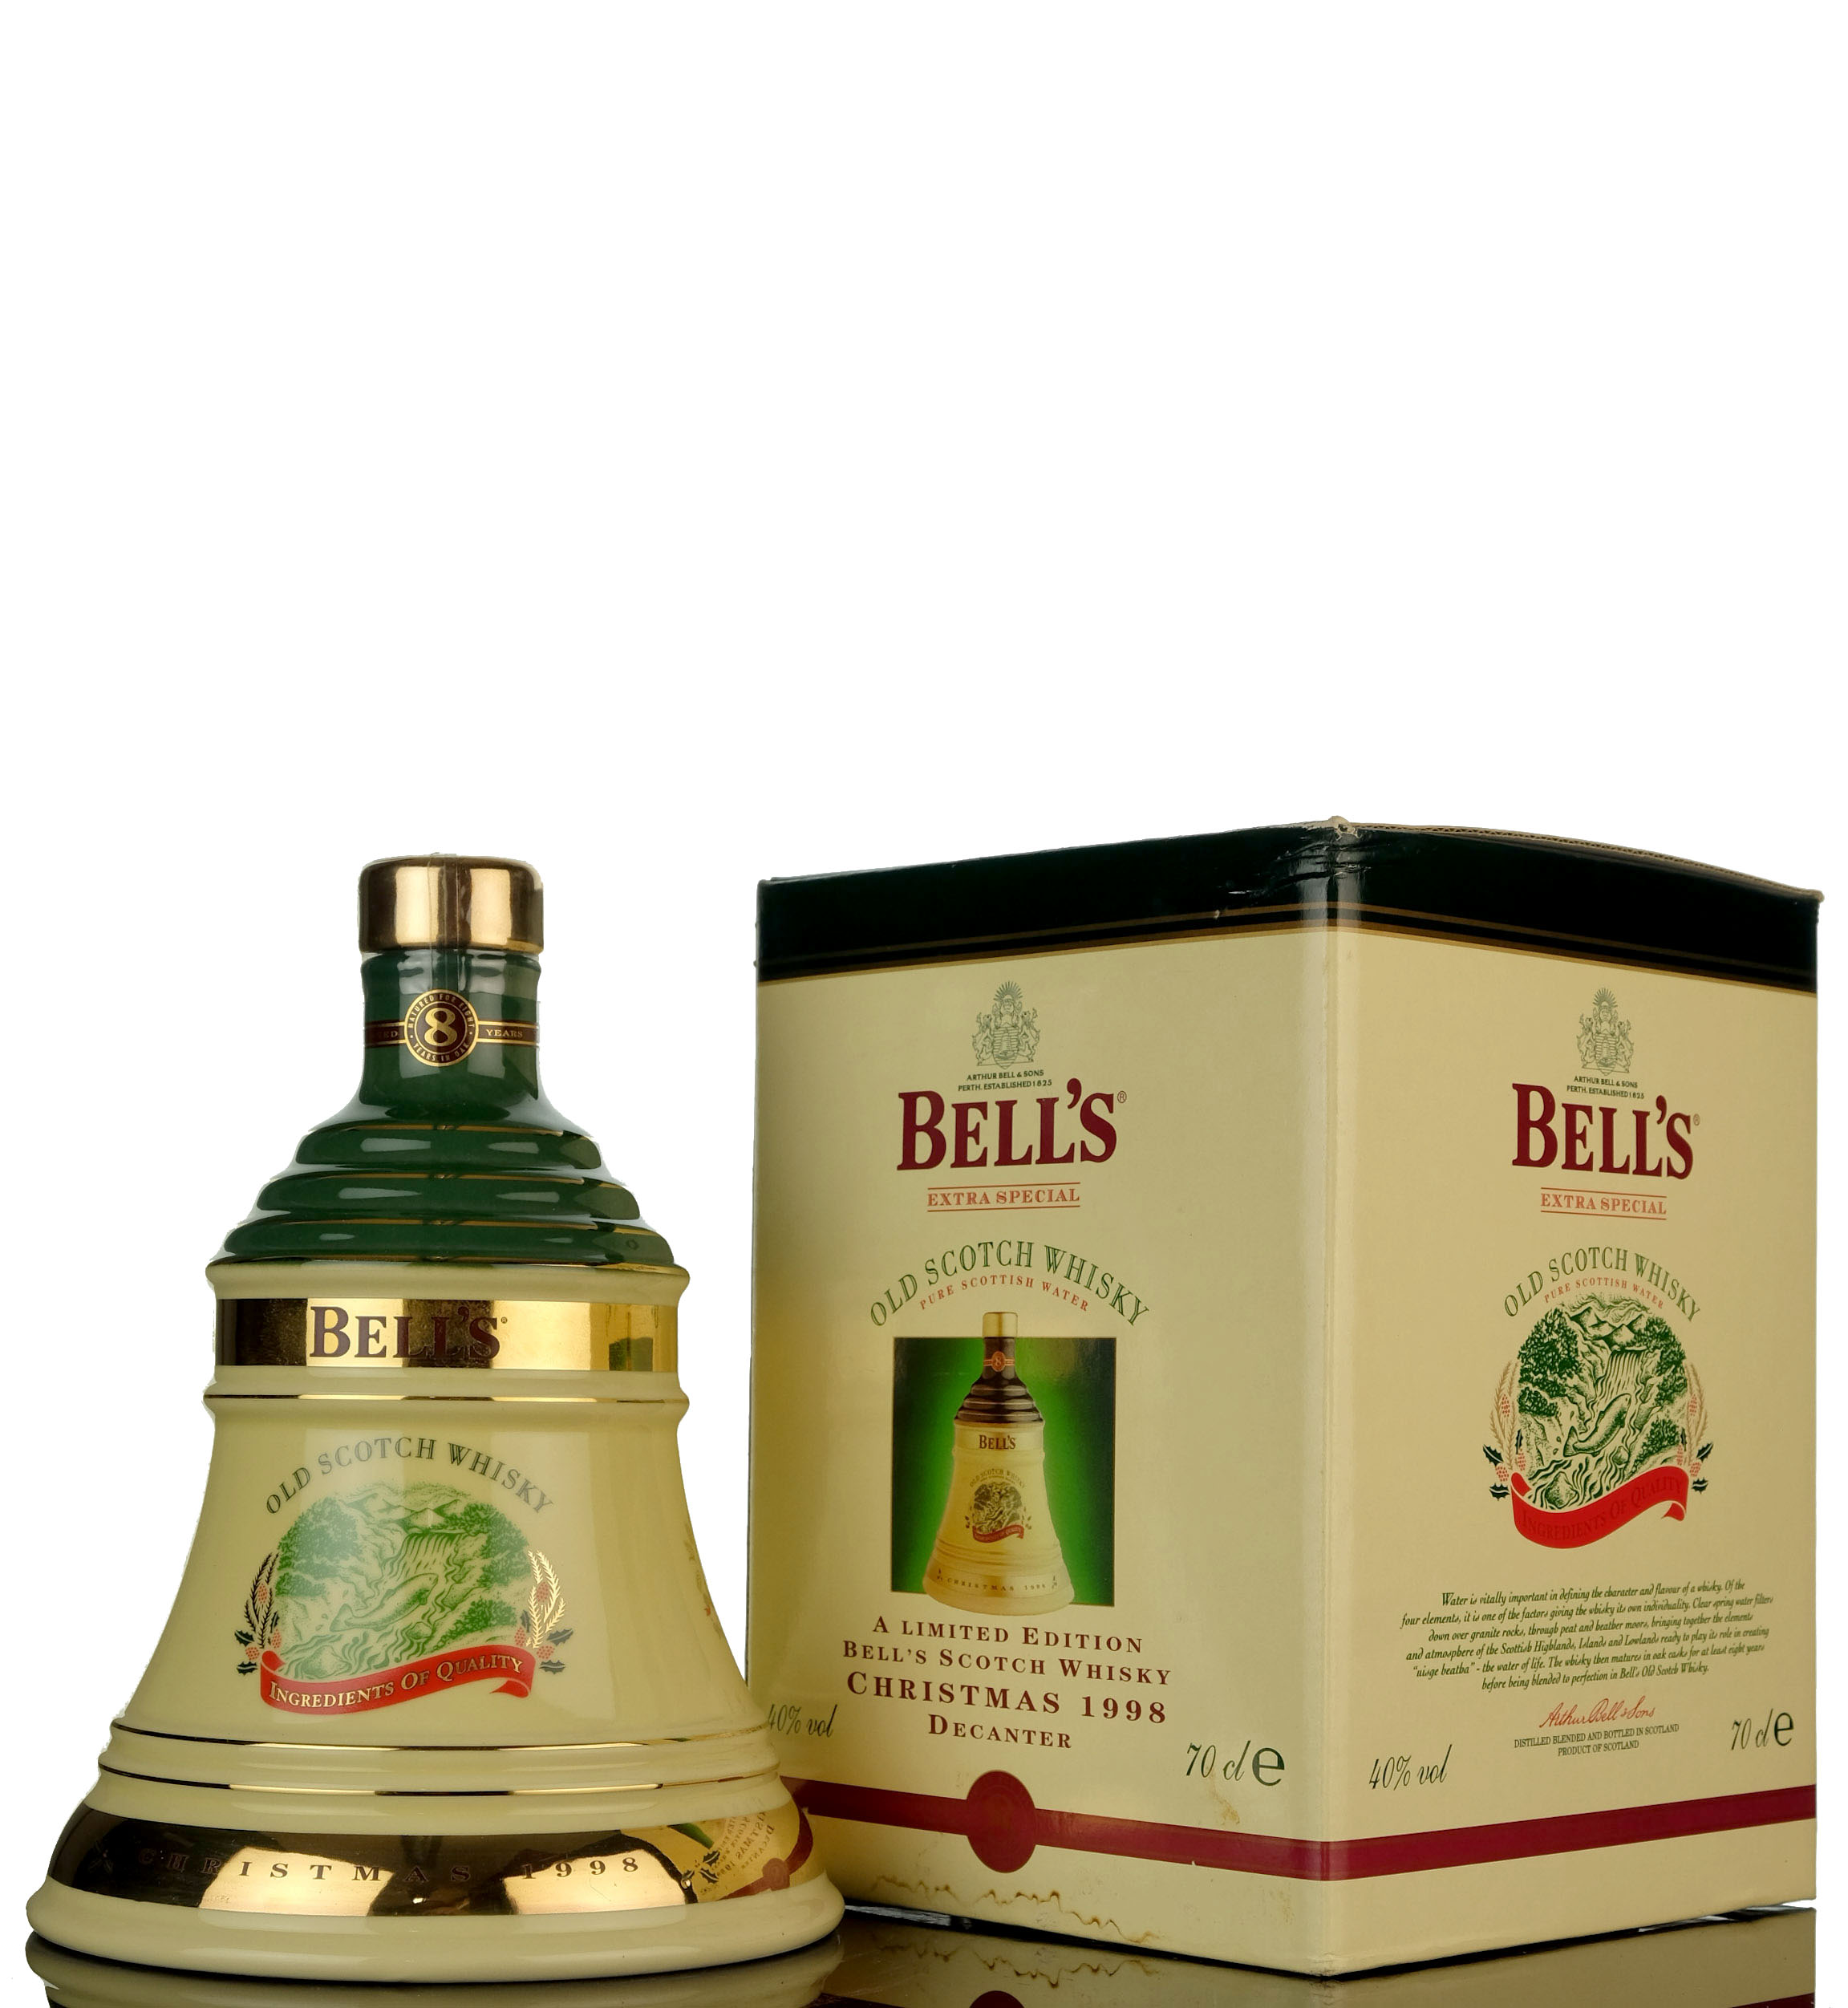 Bells Christmas 1998